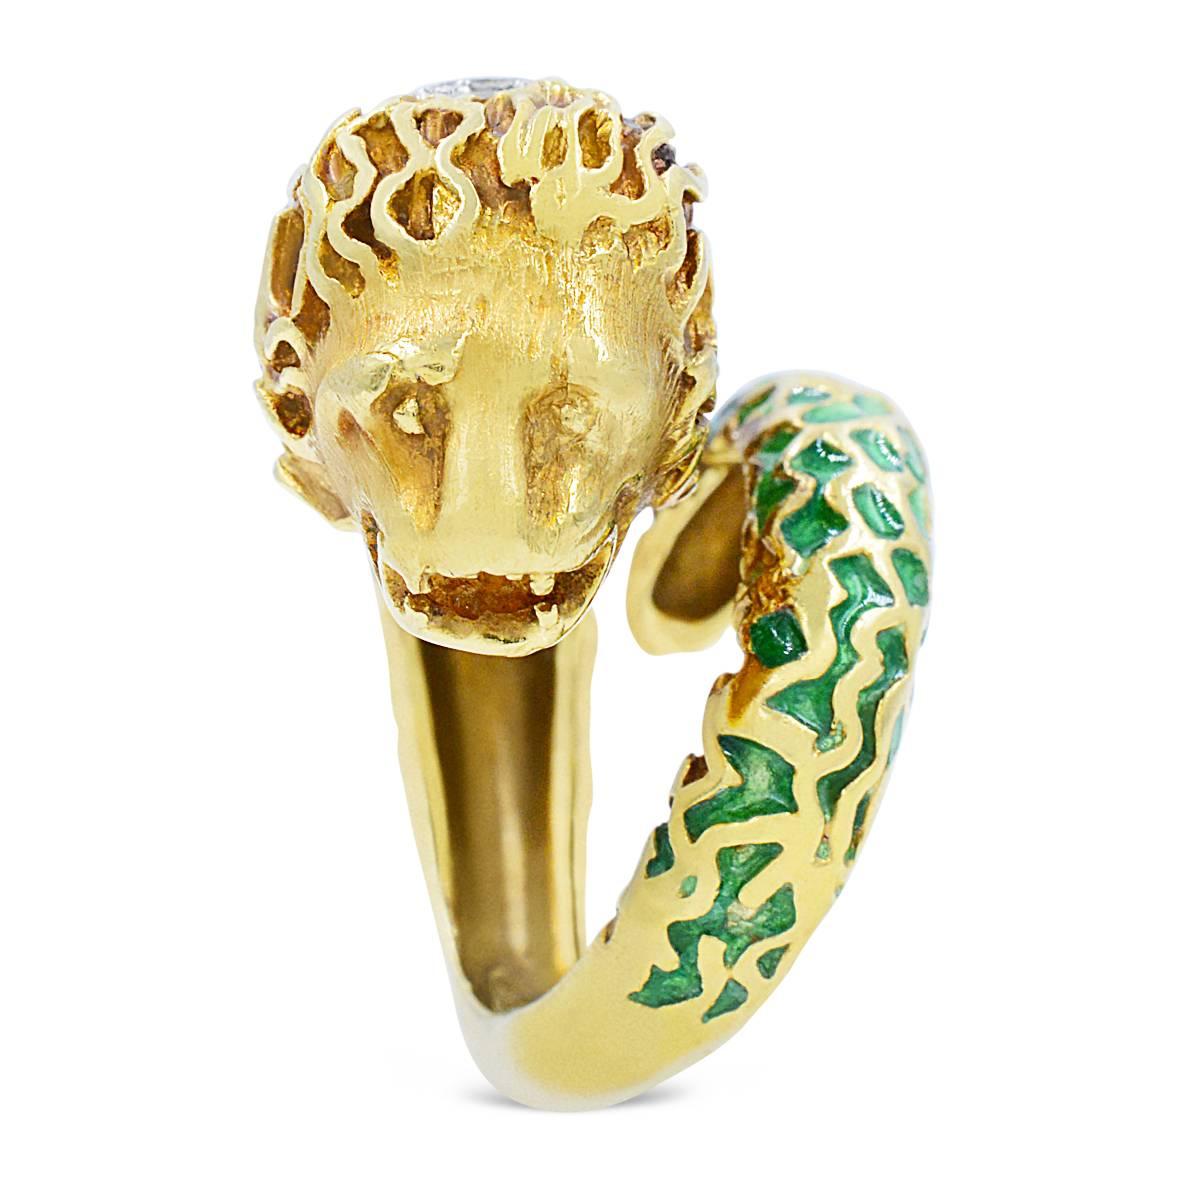 Retro Vintage Lion Diamond Enamel Ring in Yellow Gold and Green Enamel